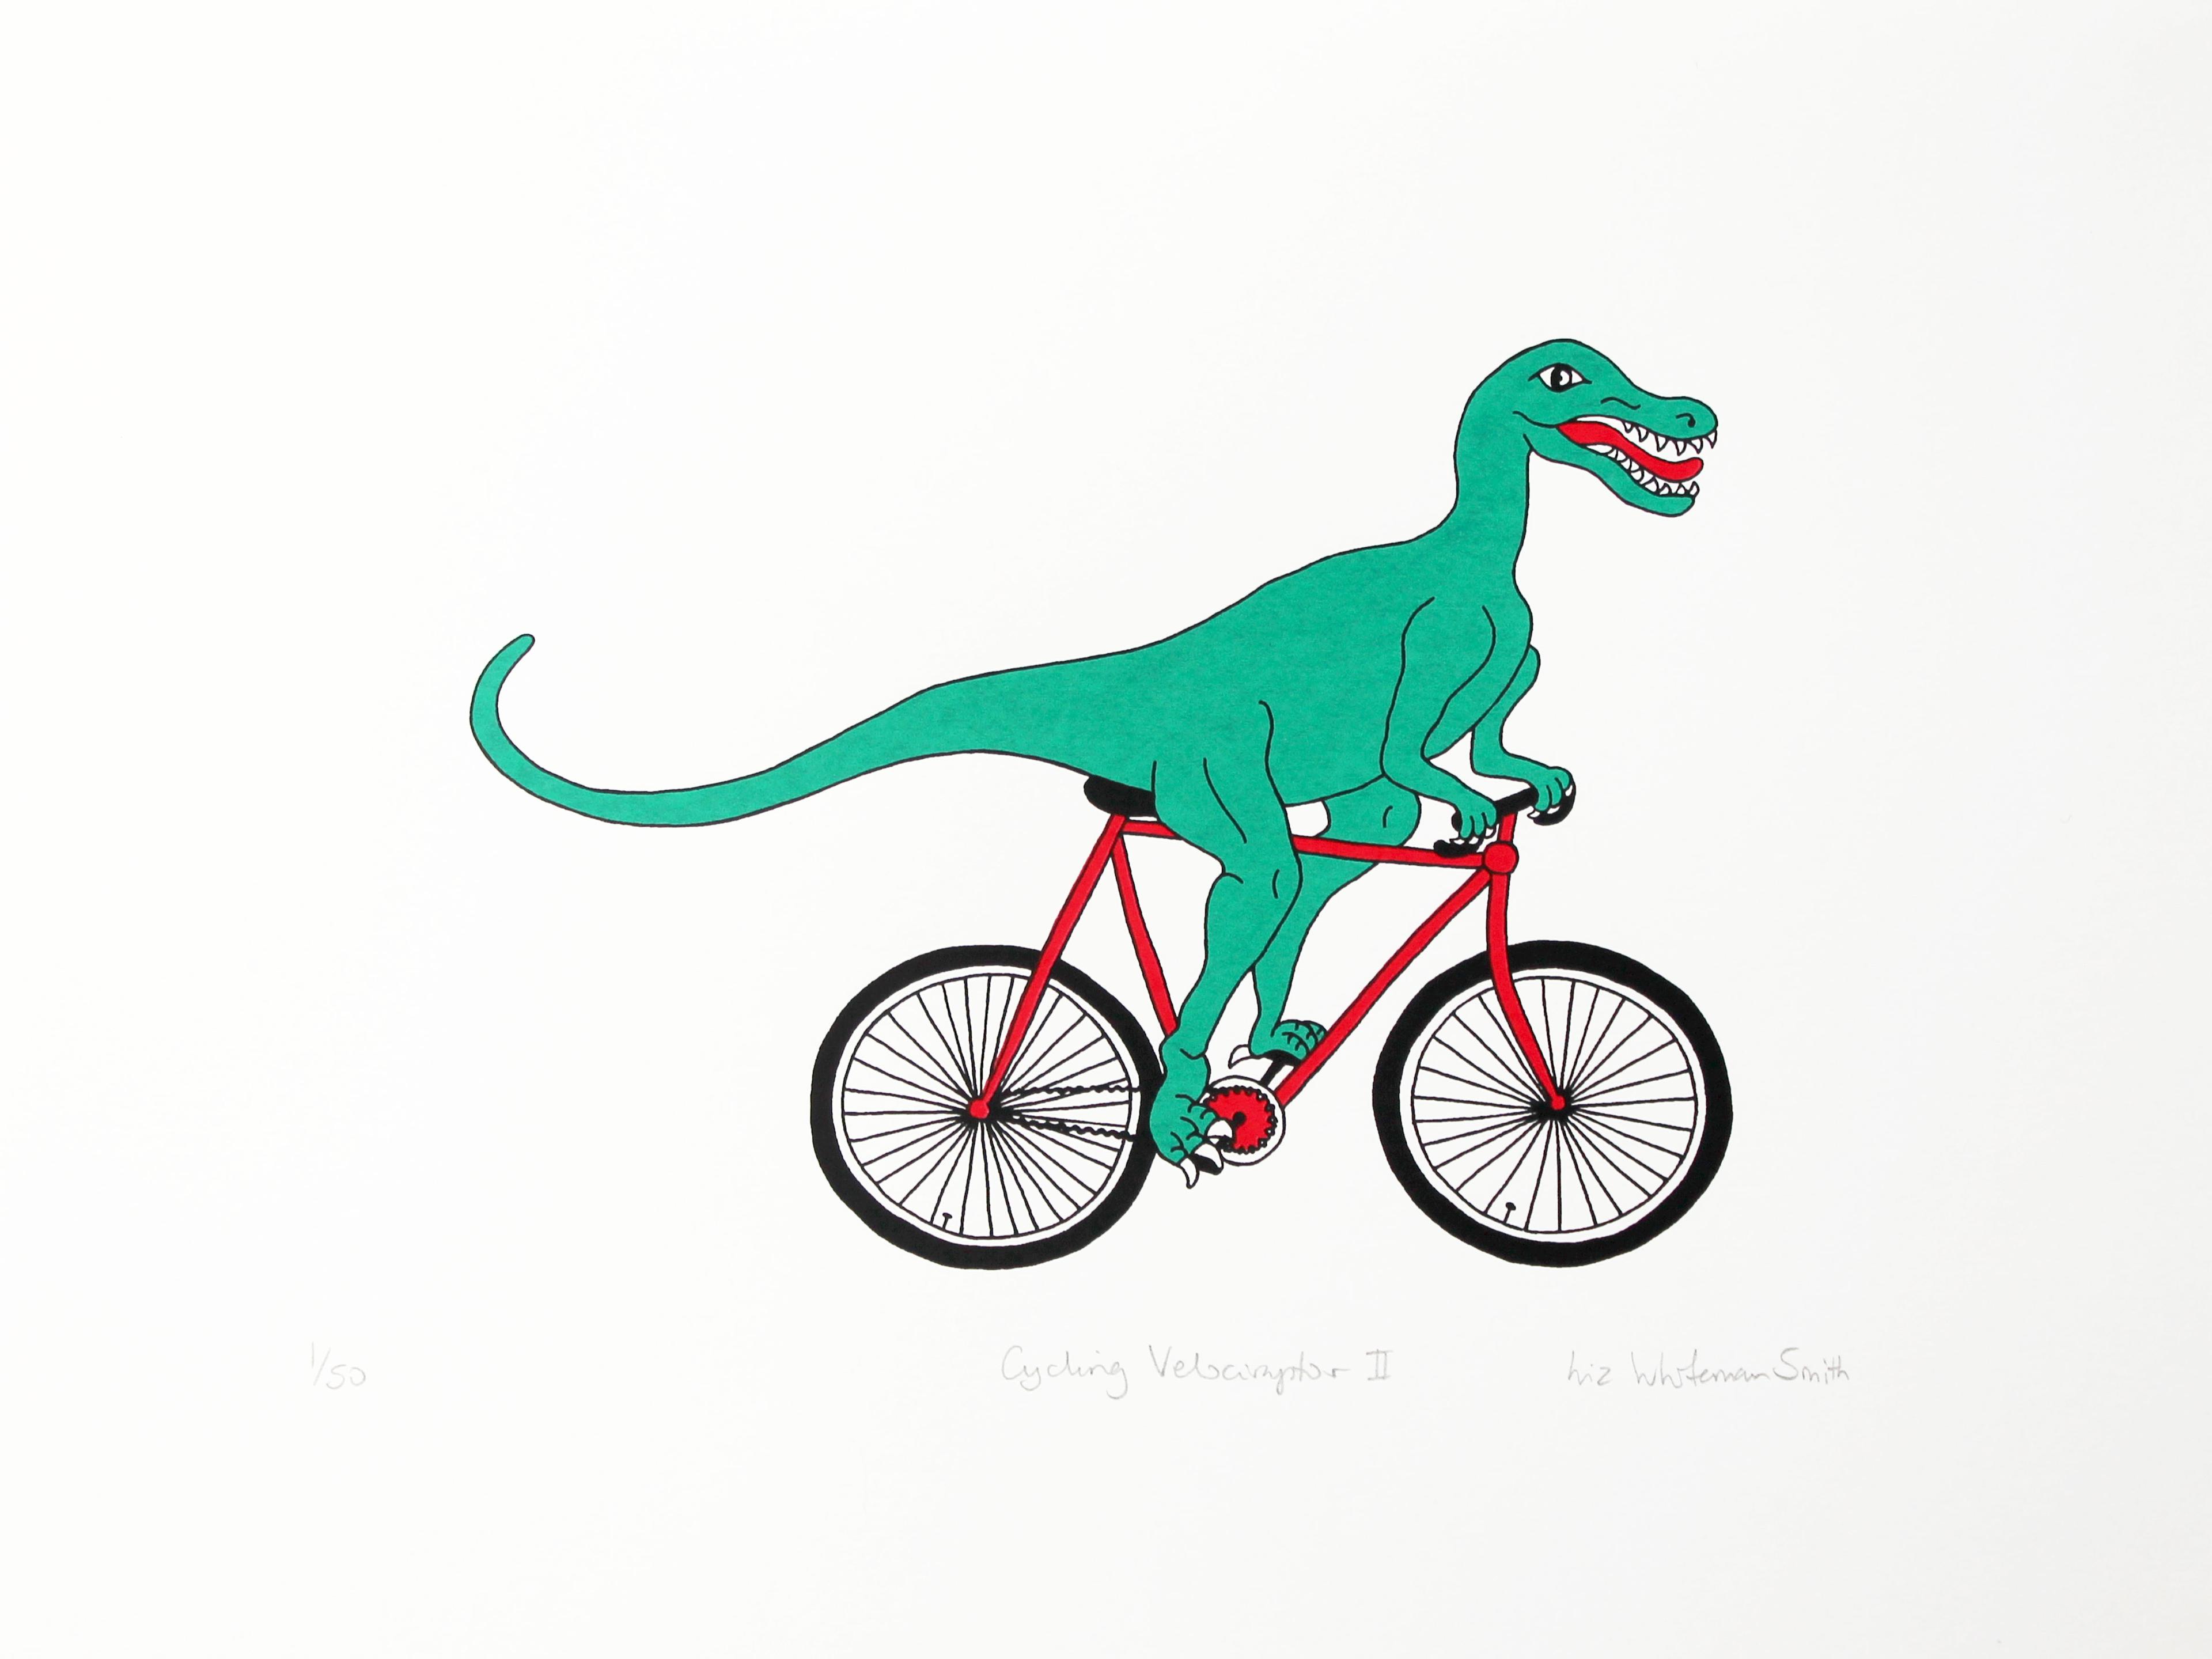 Cycling Velociraptor II